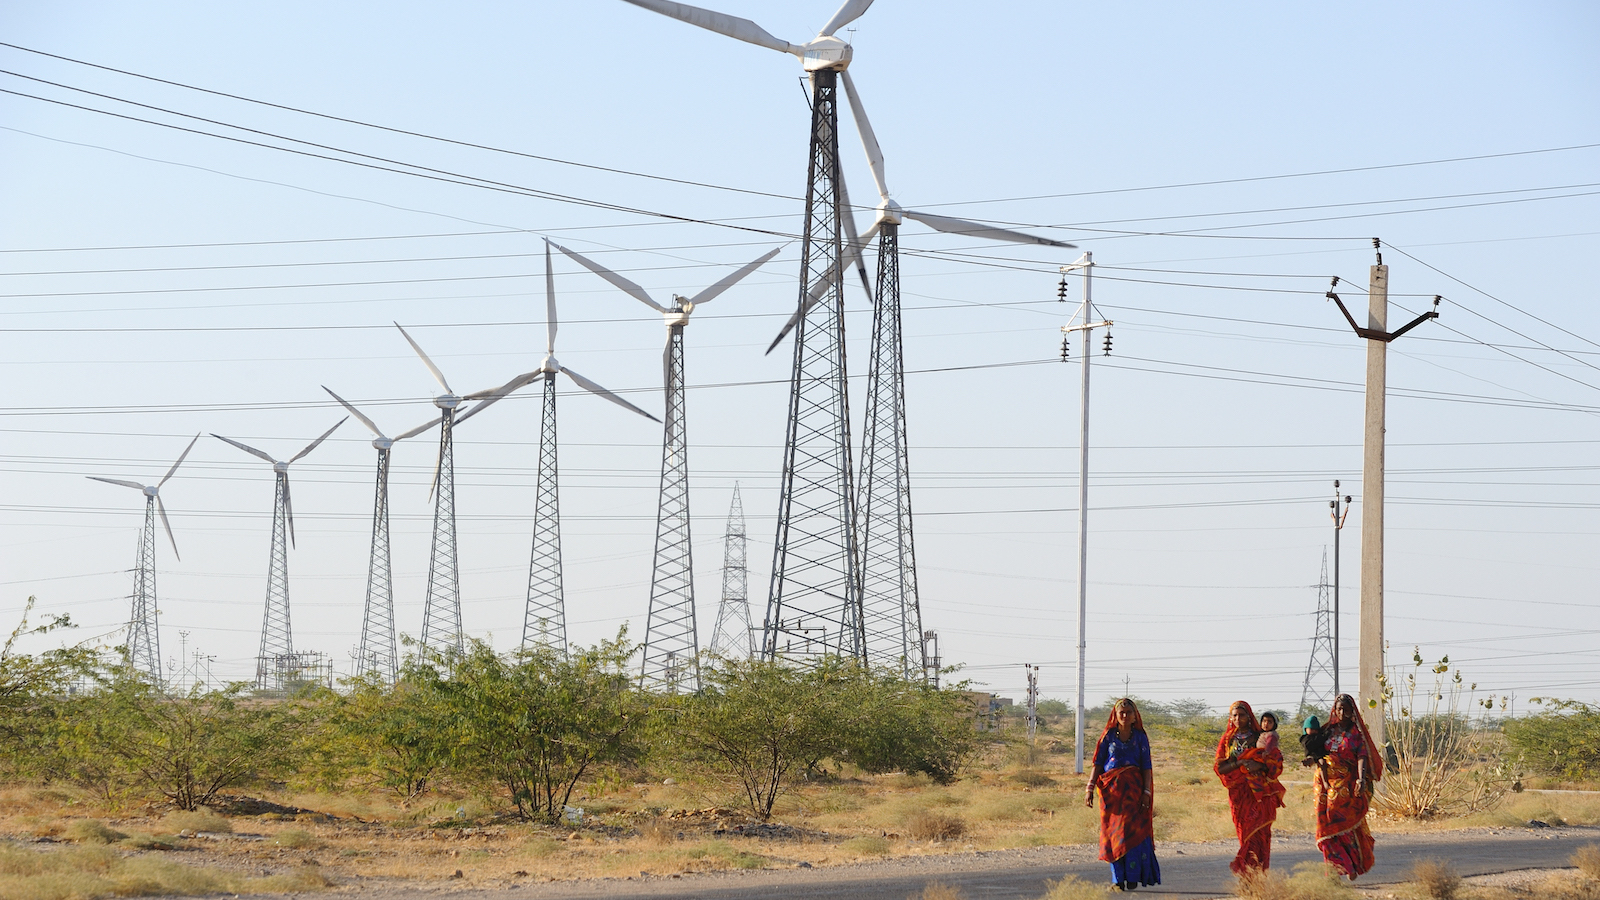 three women walk near a wind farm in India